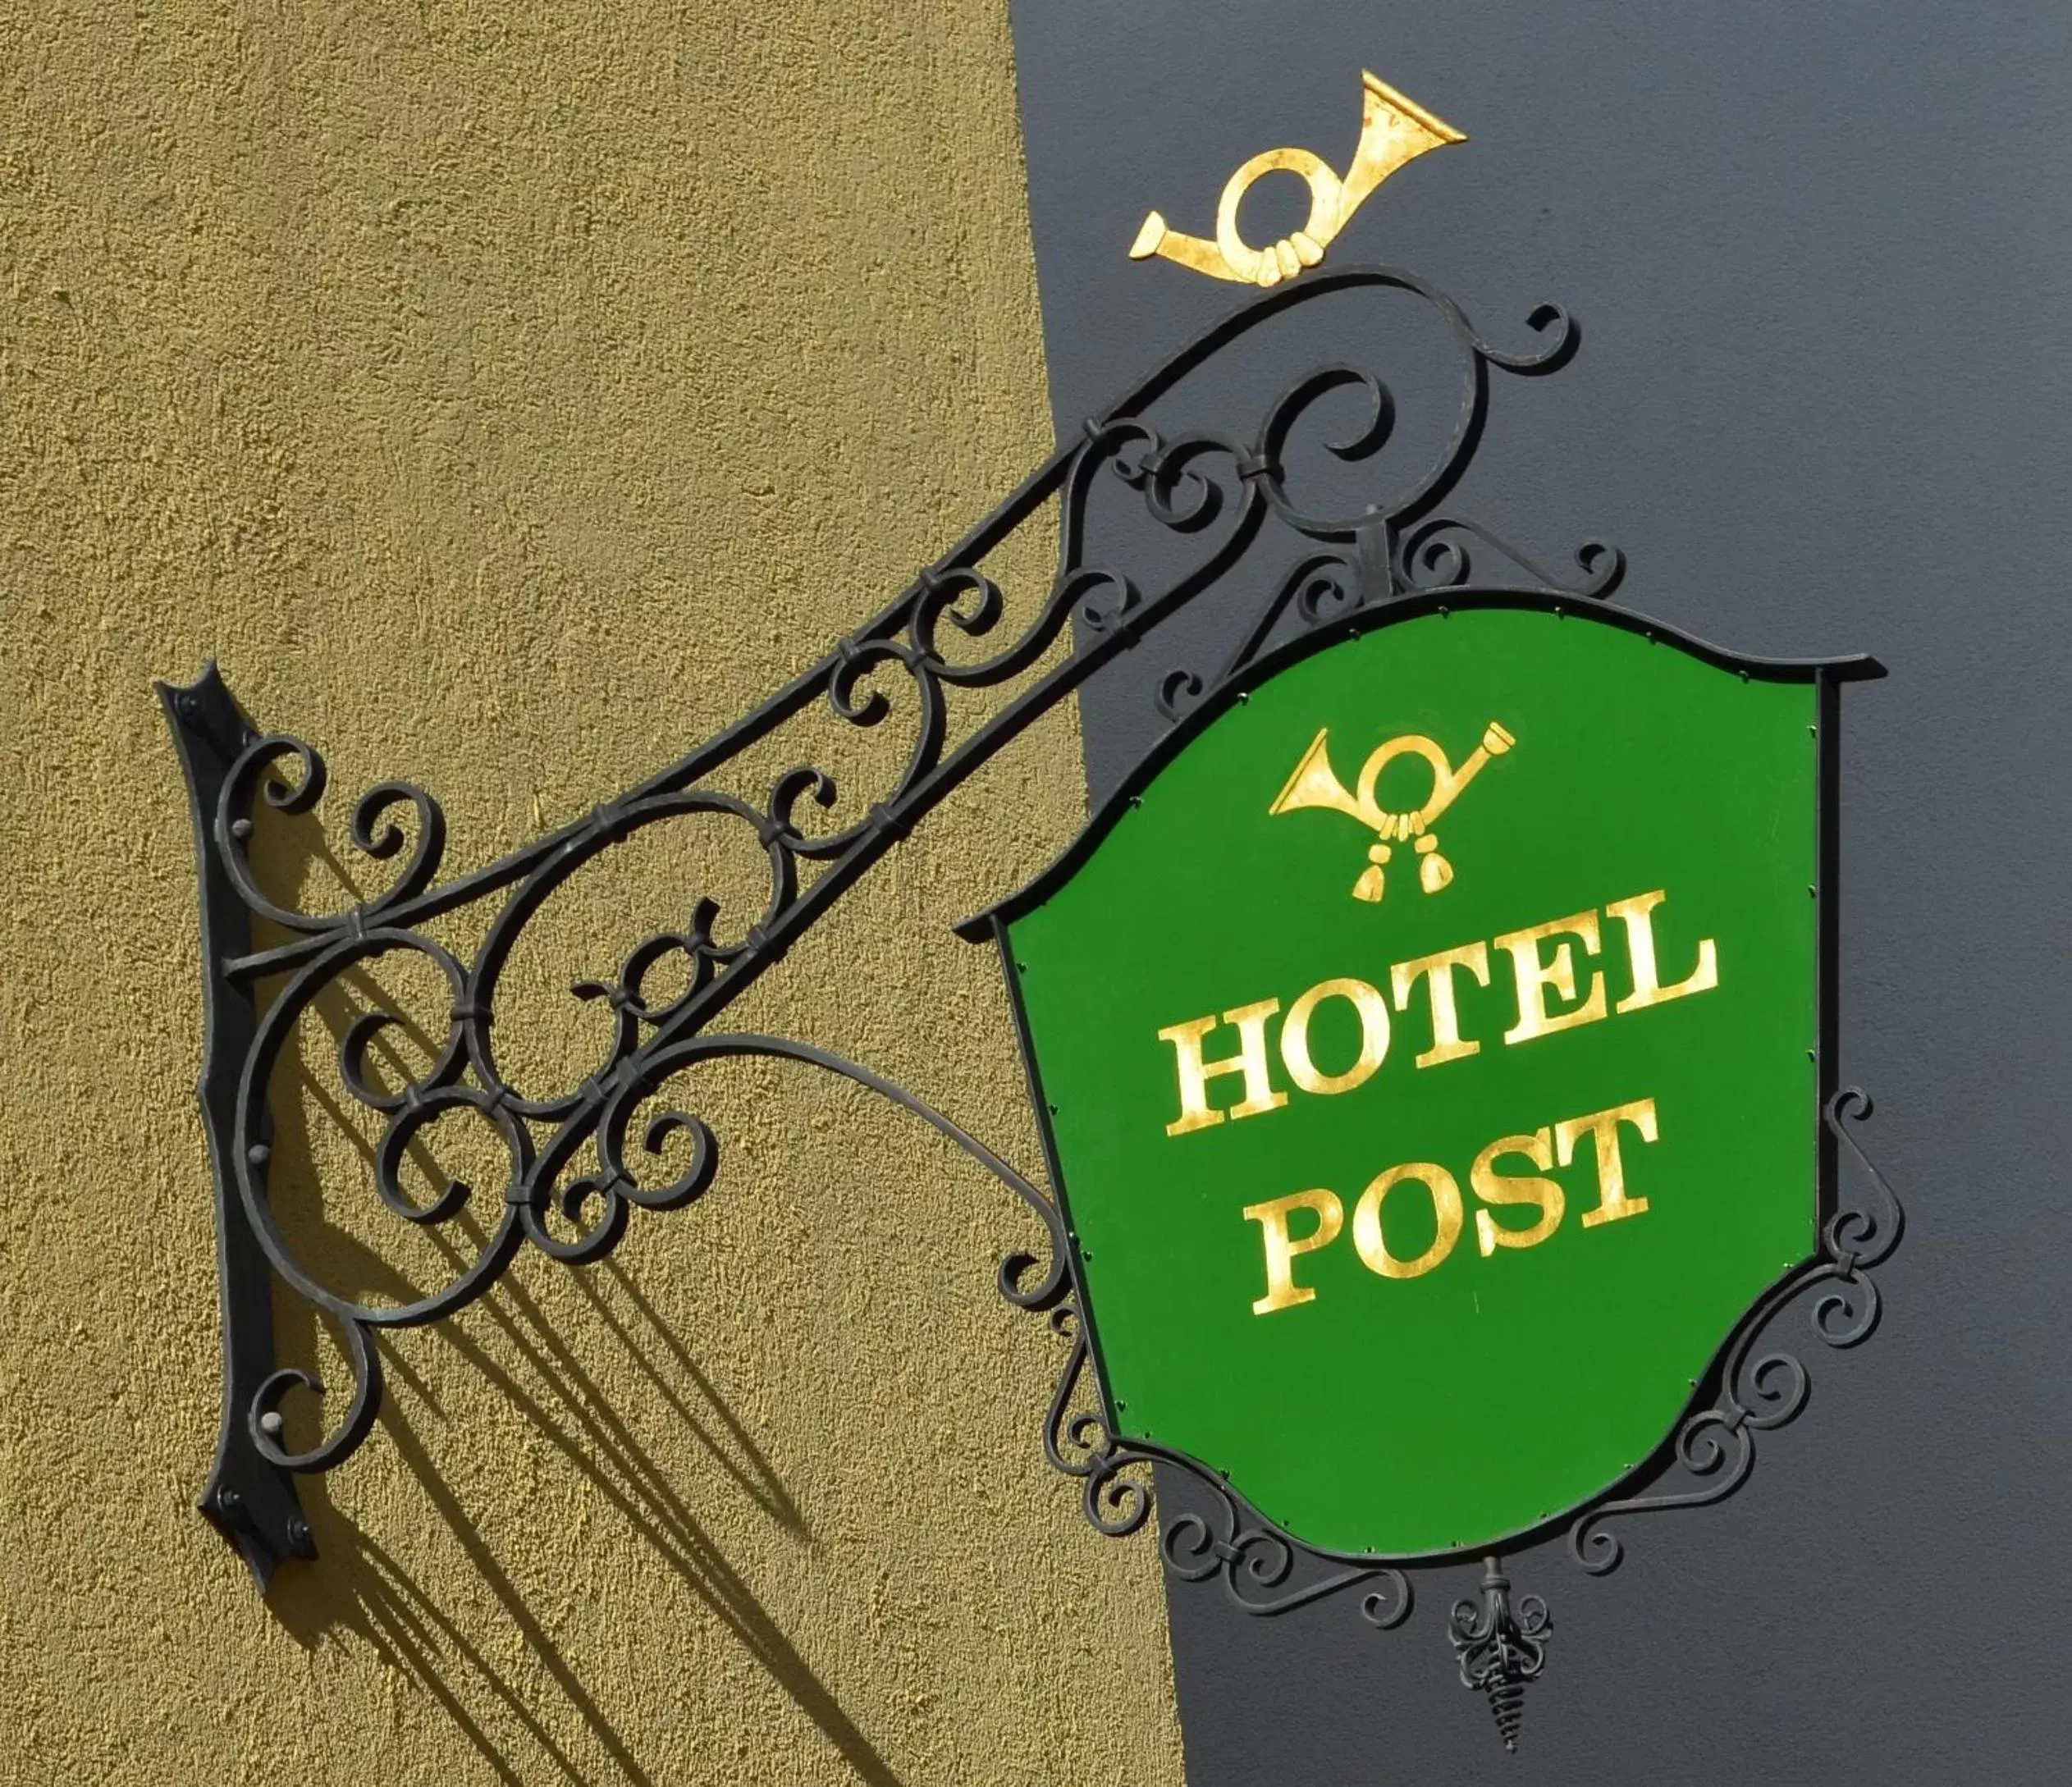 Facade/entrance, Logo/Certificate/Sign/Award in Central Hotel Post